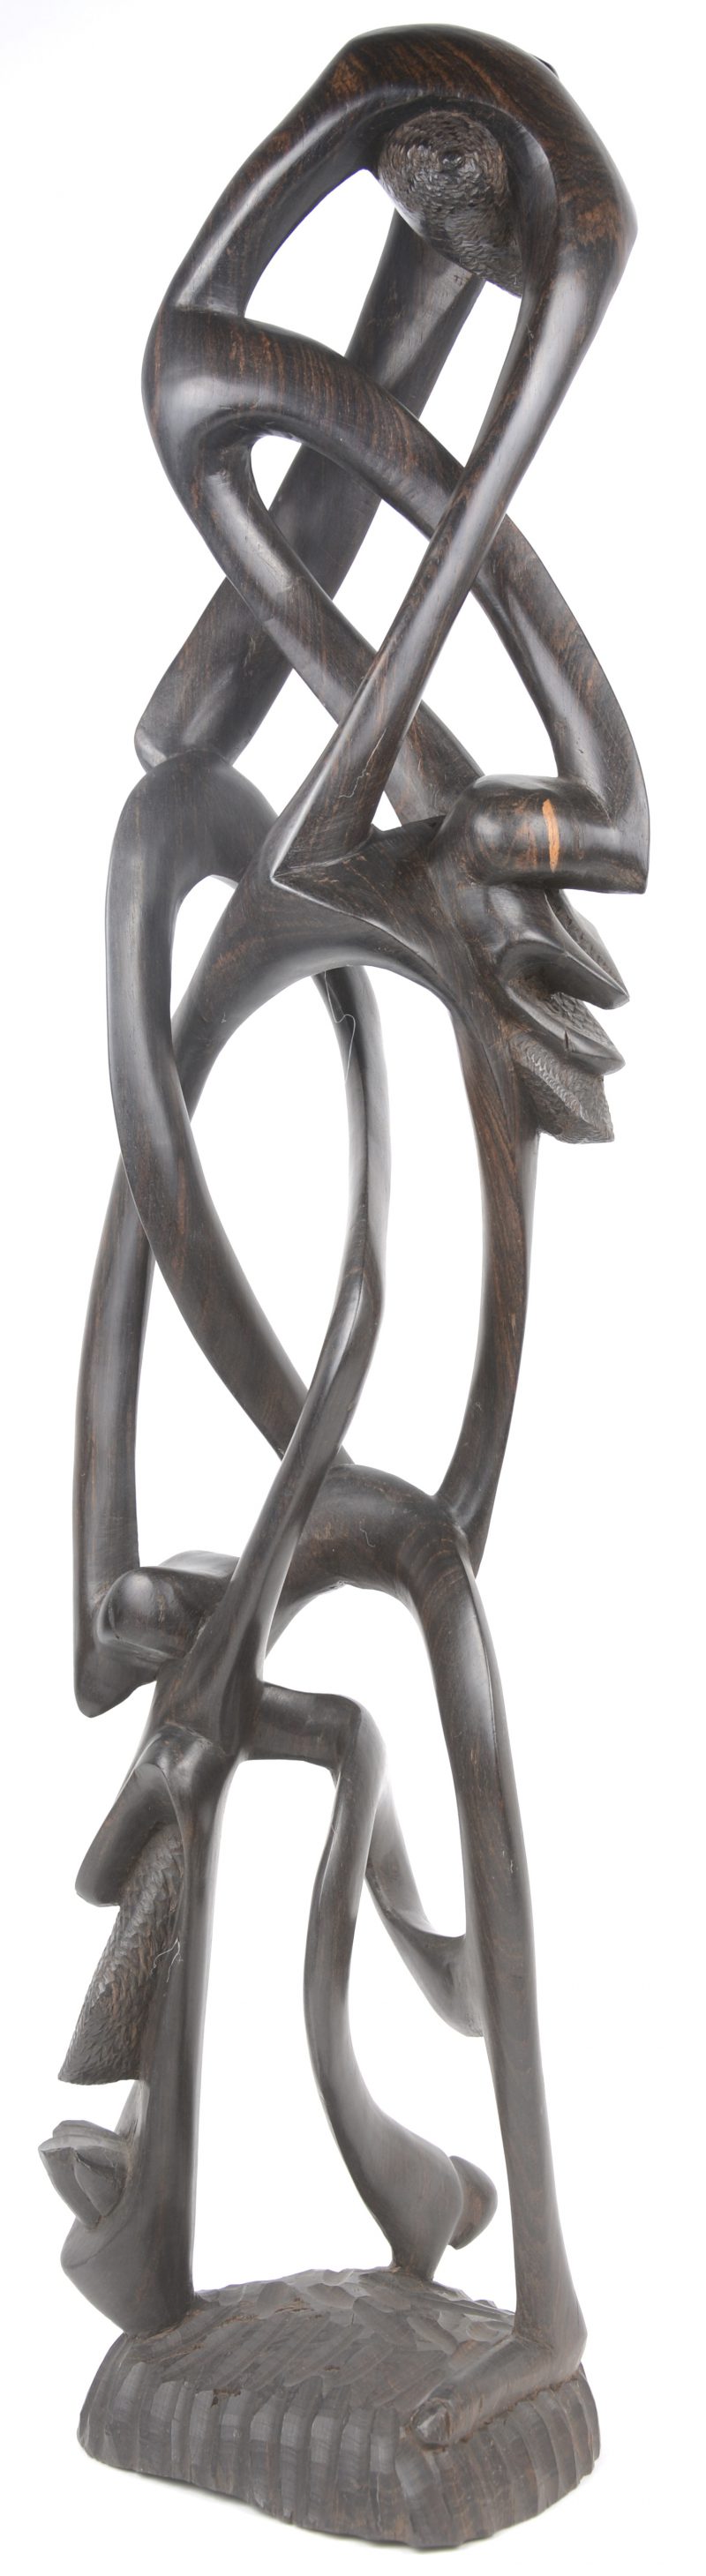 Afrikaanse ebbenhouten non-figuratieve sculptuur.